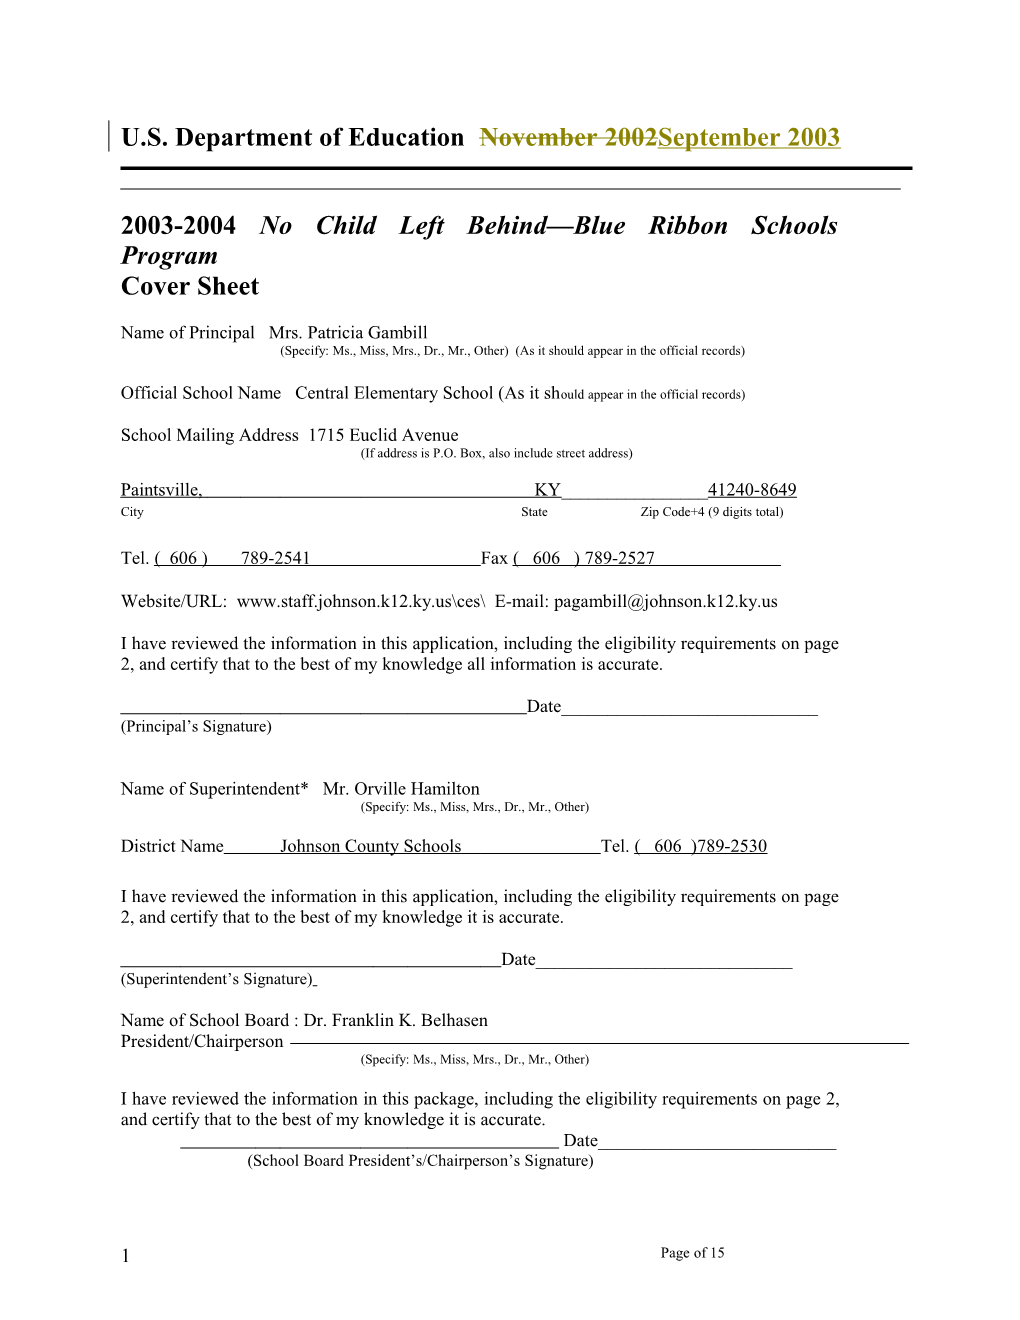 Central Elementary School 2004 No Child Left Behind-Blue Ribbon School Application (Msword)